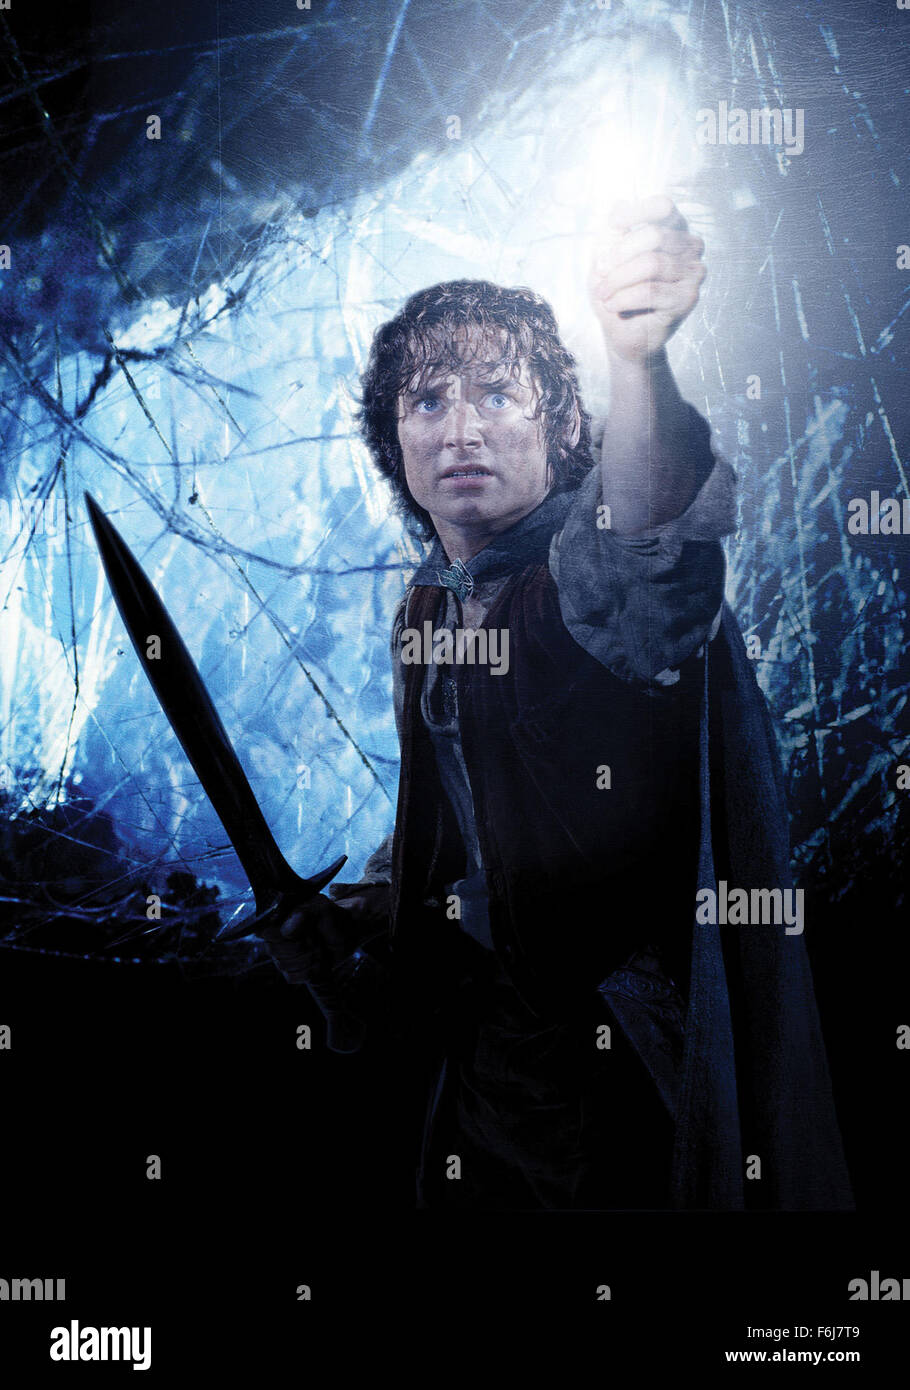 Frodo -Fotos und -Bildmaterial in hoher Auflösung – Alamy